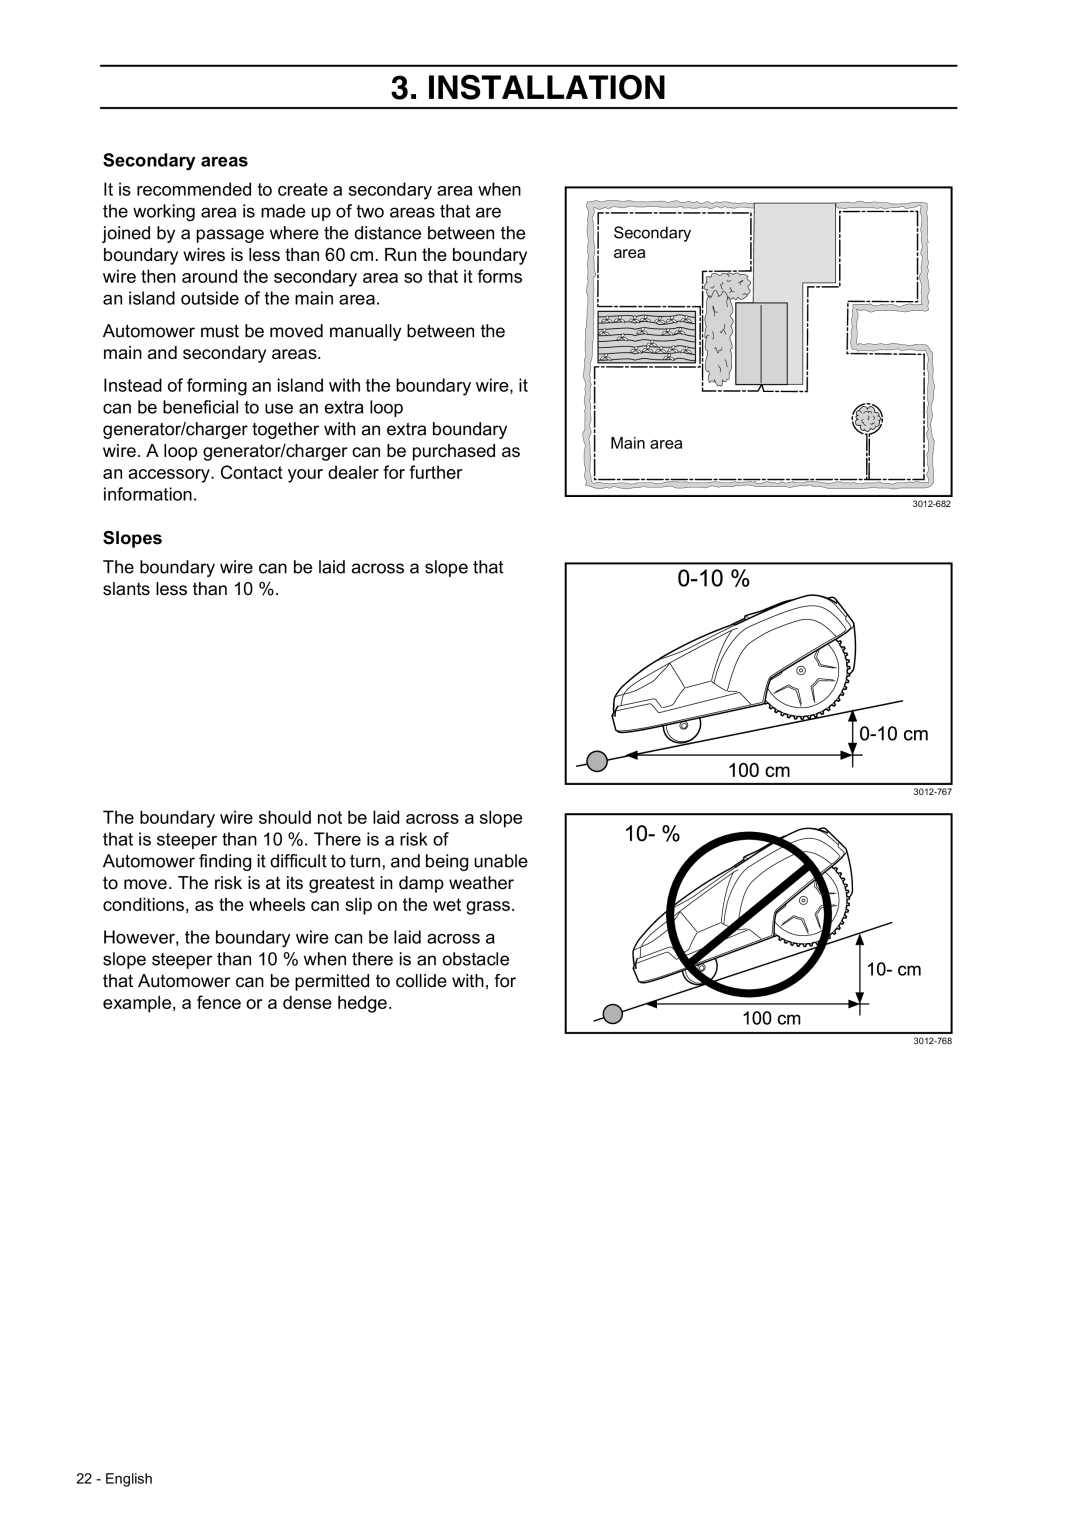 Husqvarna 210 C manual Secondary areas, Slopes, Installation 